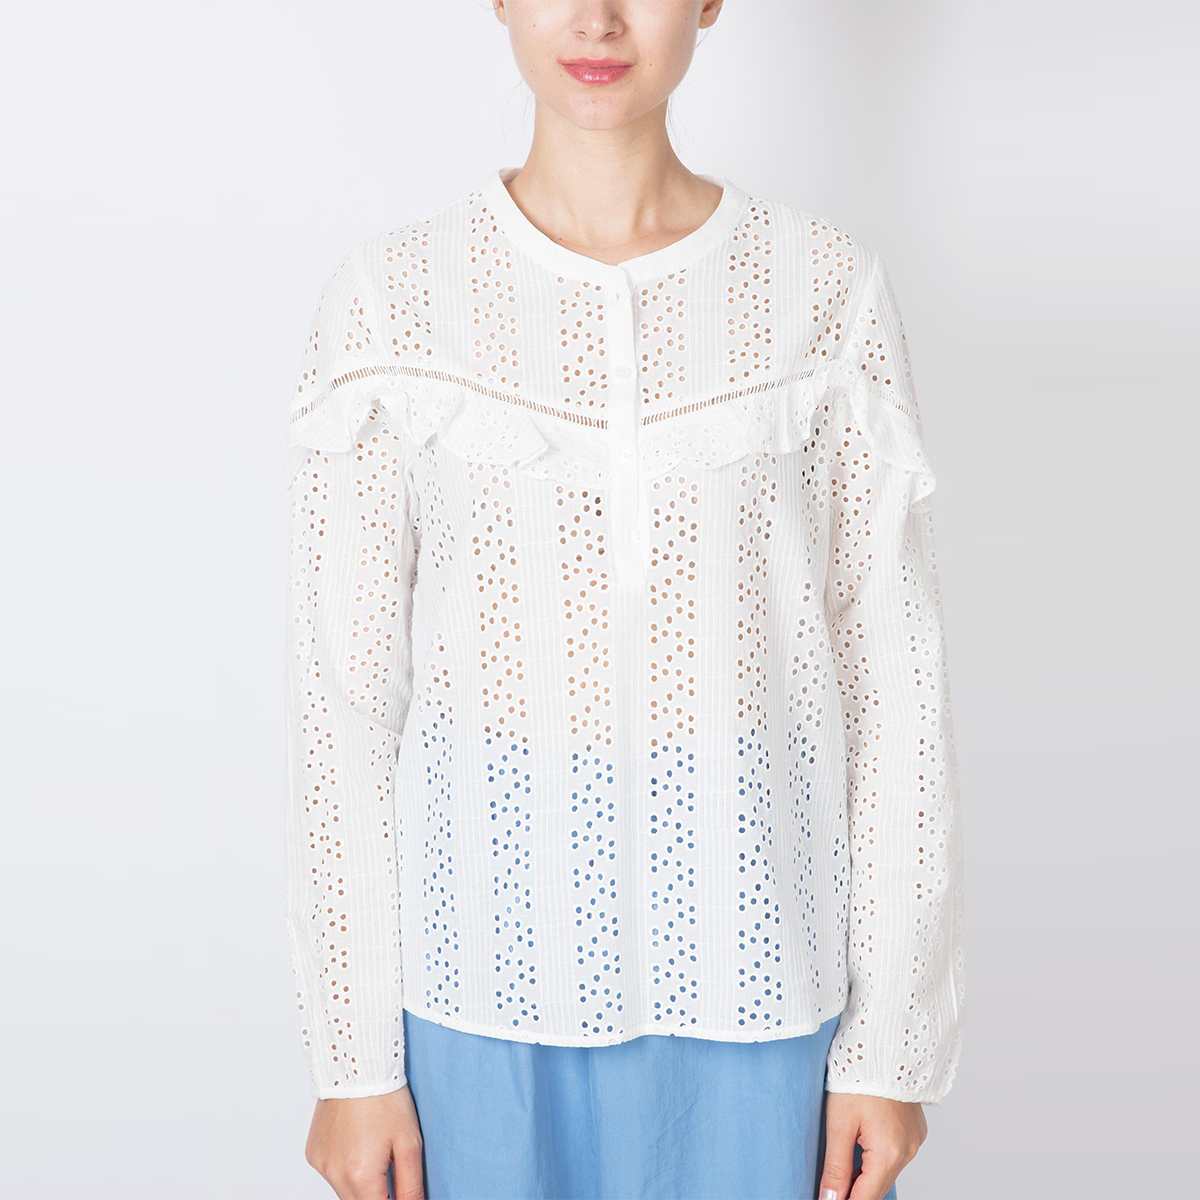 Crocheted Lace Shirt